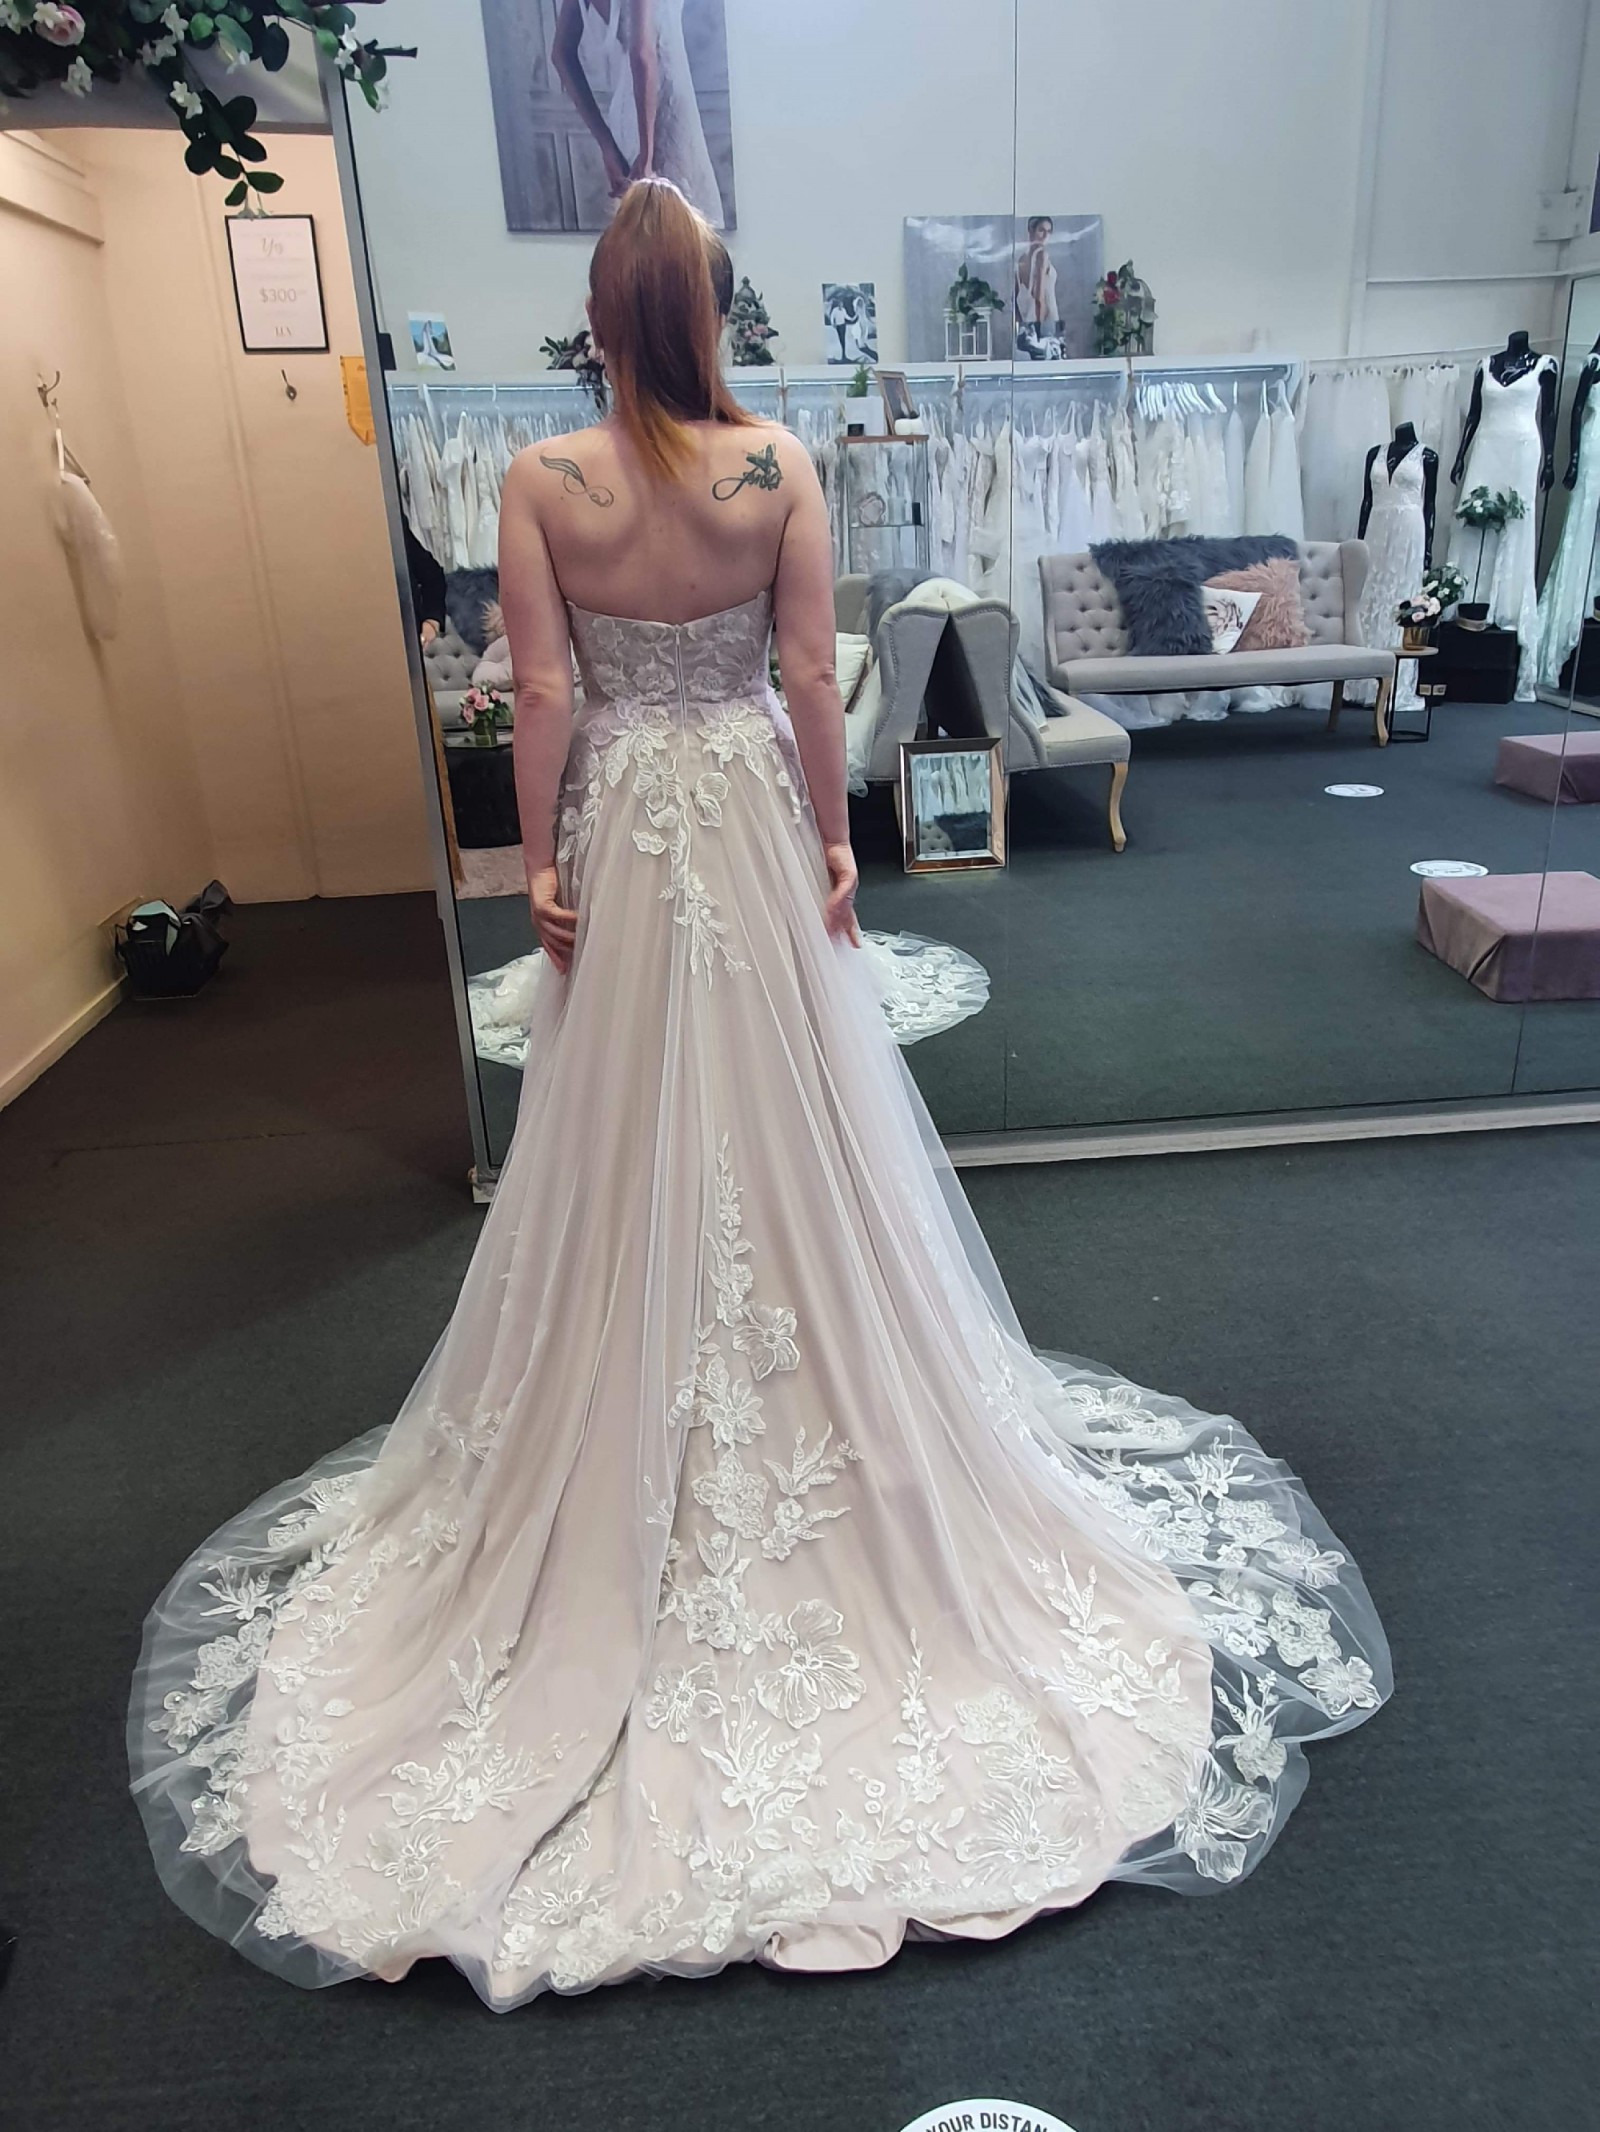 Madi Lane HAVEN - BRAND NEW New Wedding Dress Save 41% - Stillwhite